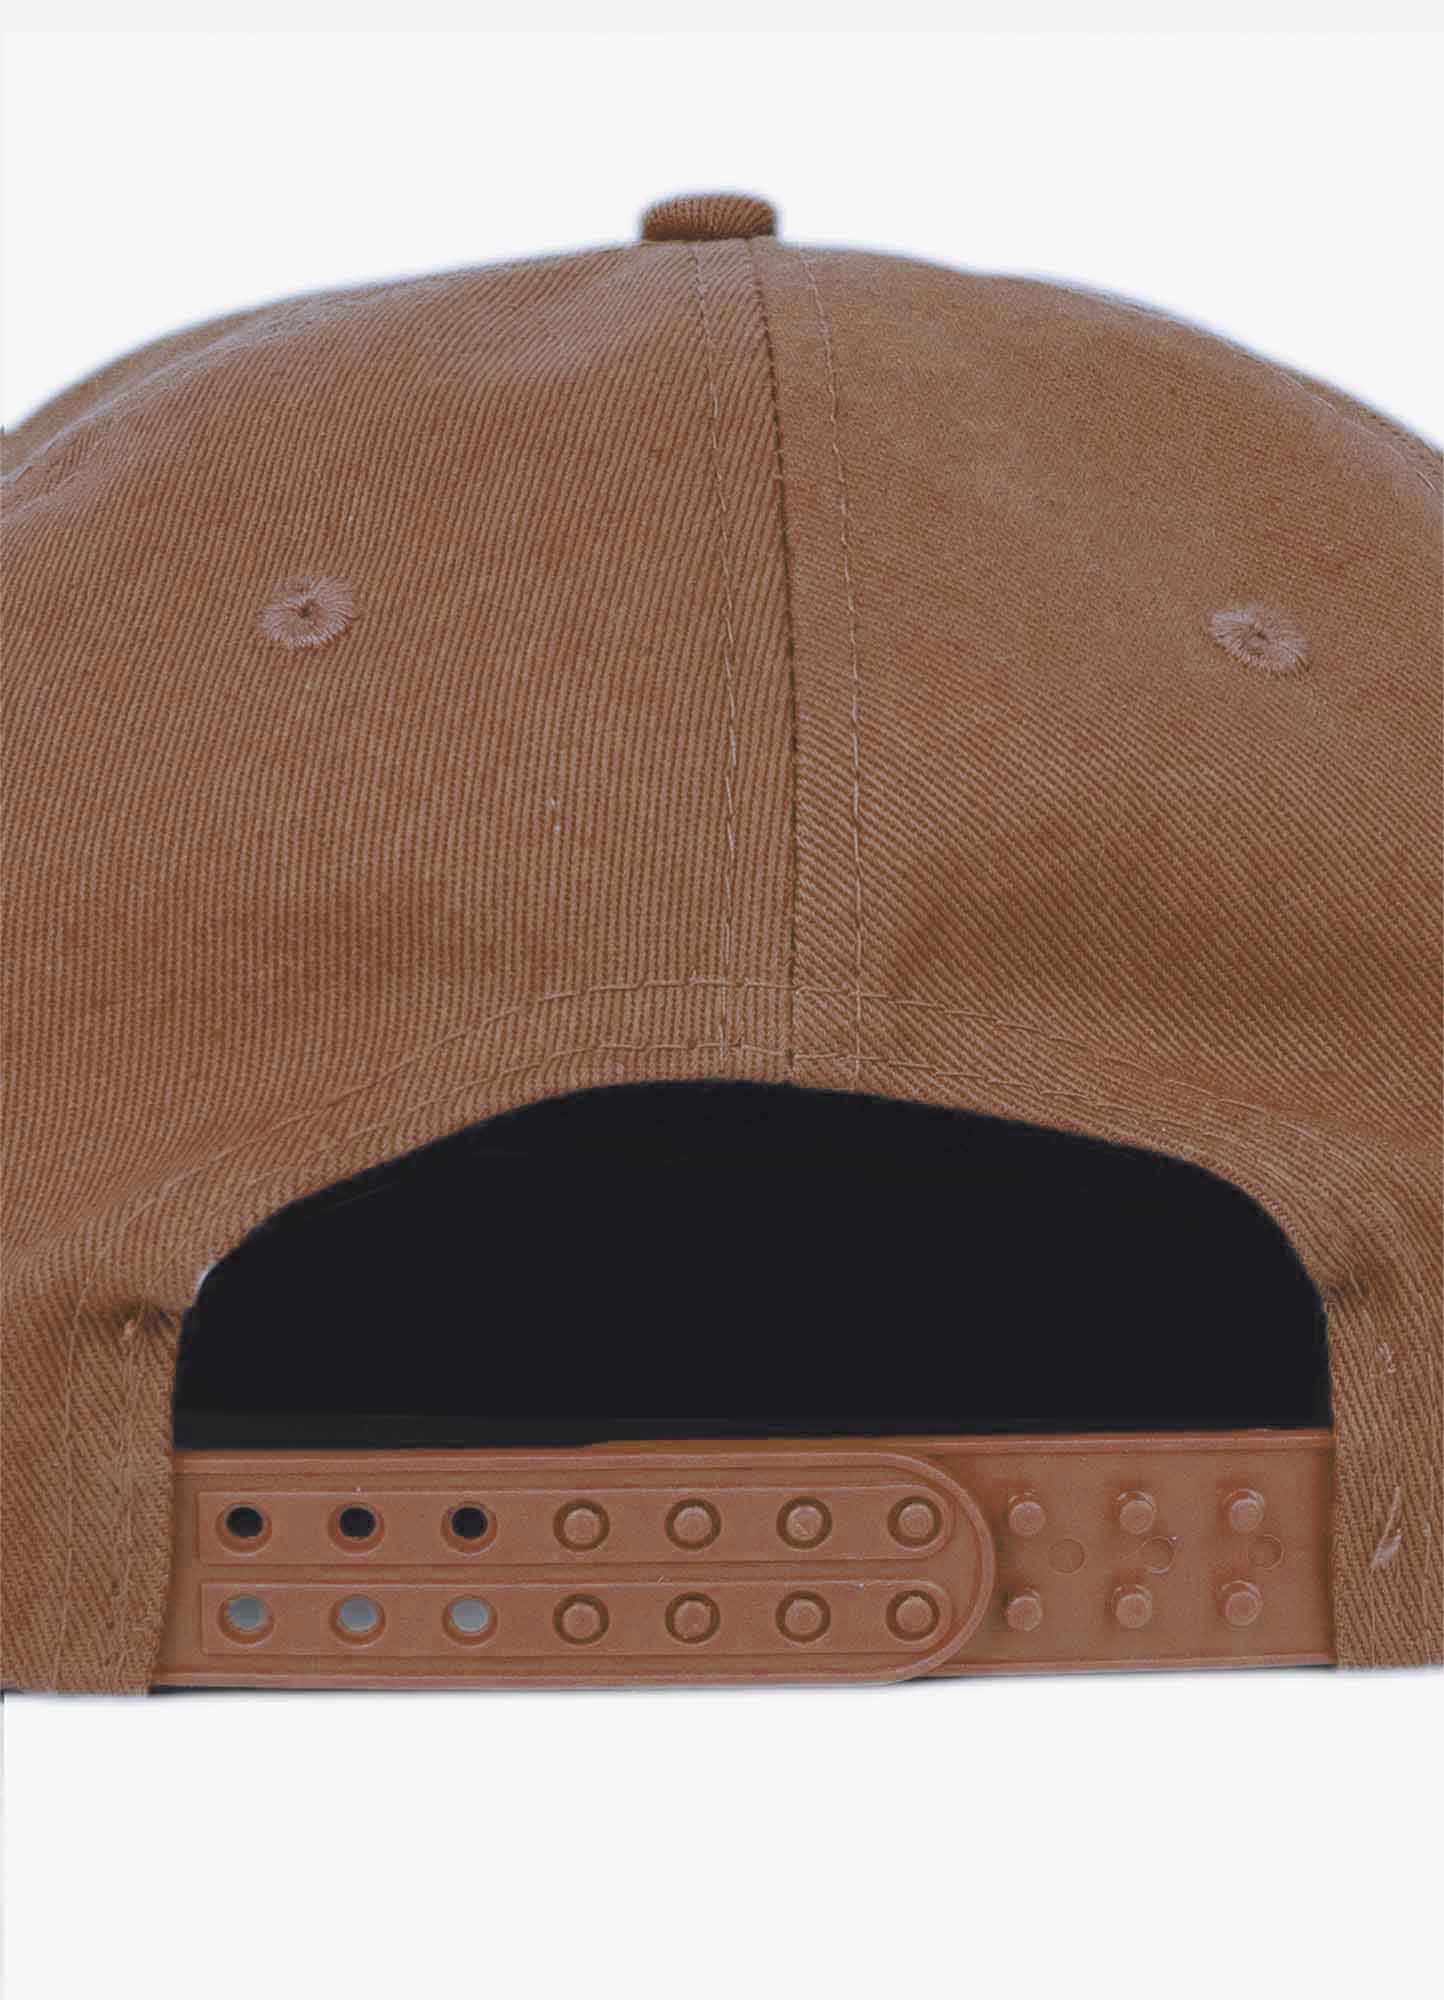 Gear Swap Hat | Brown